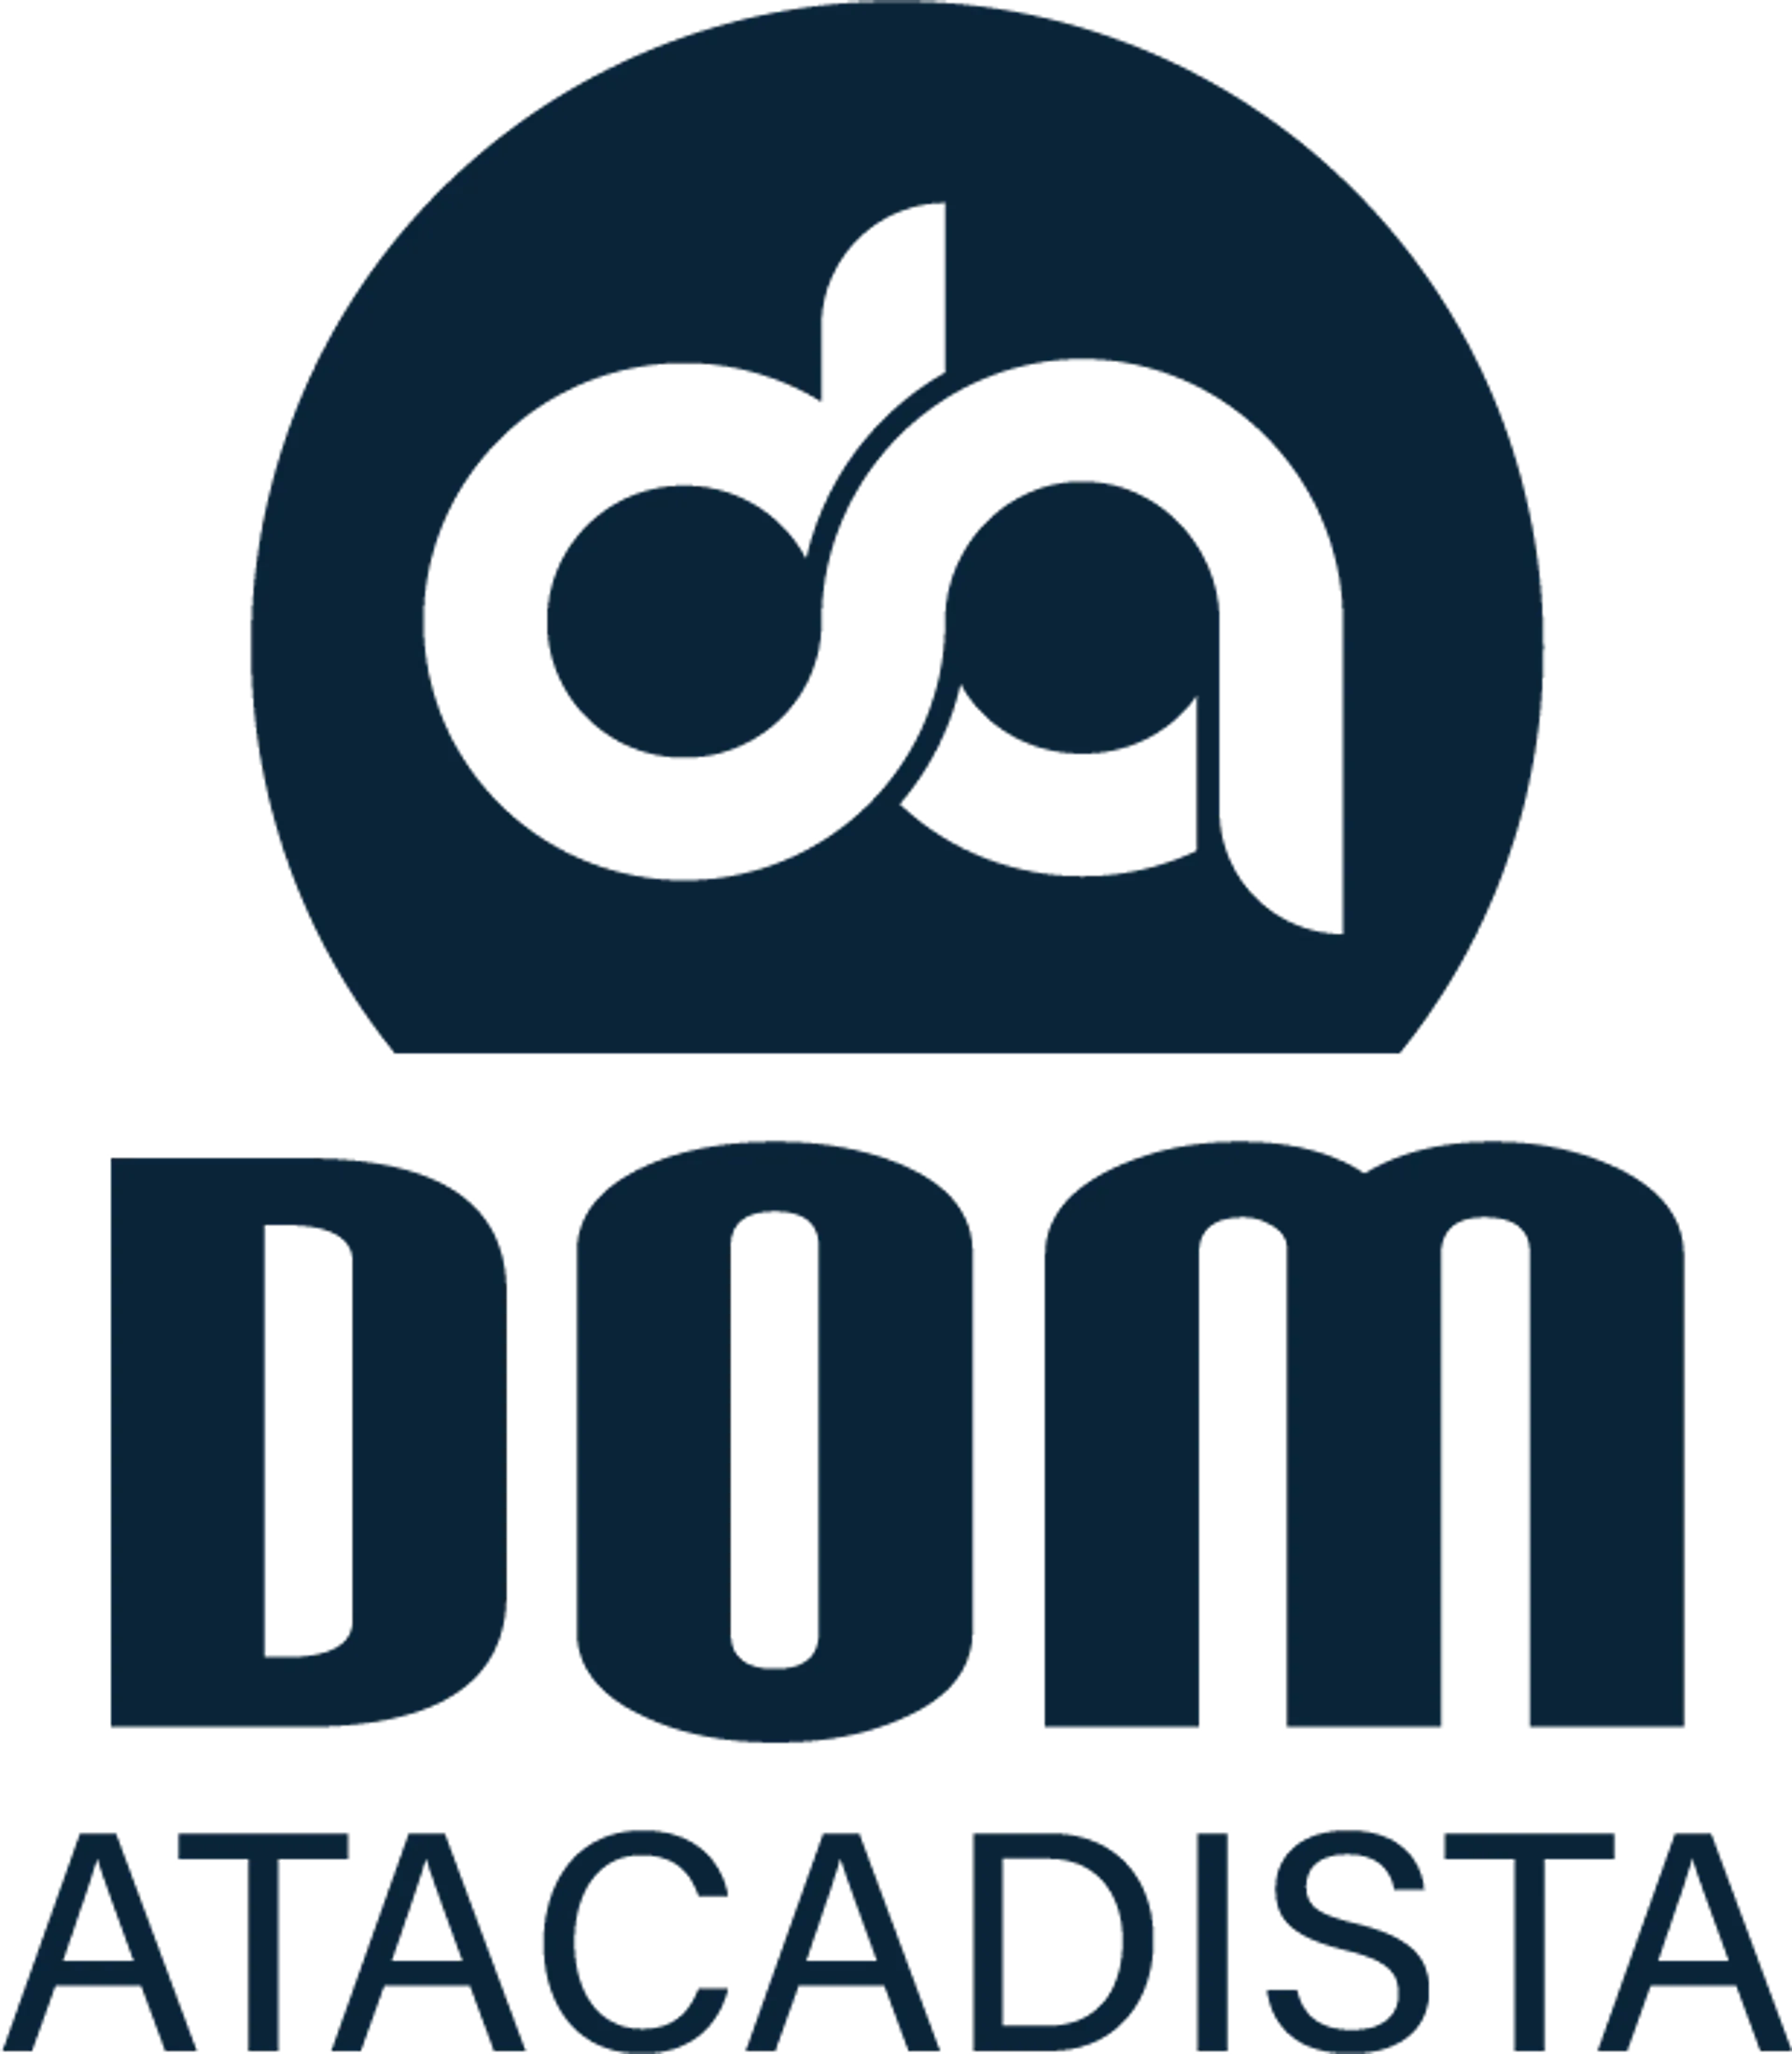 DOM ATACADISTA logo de catálogo